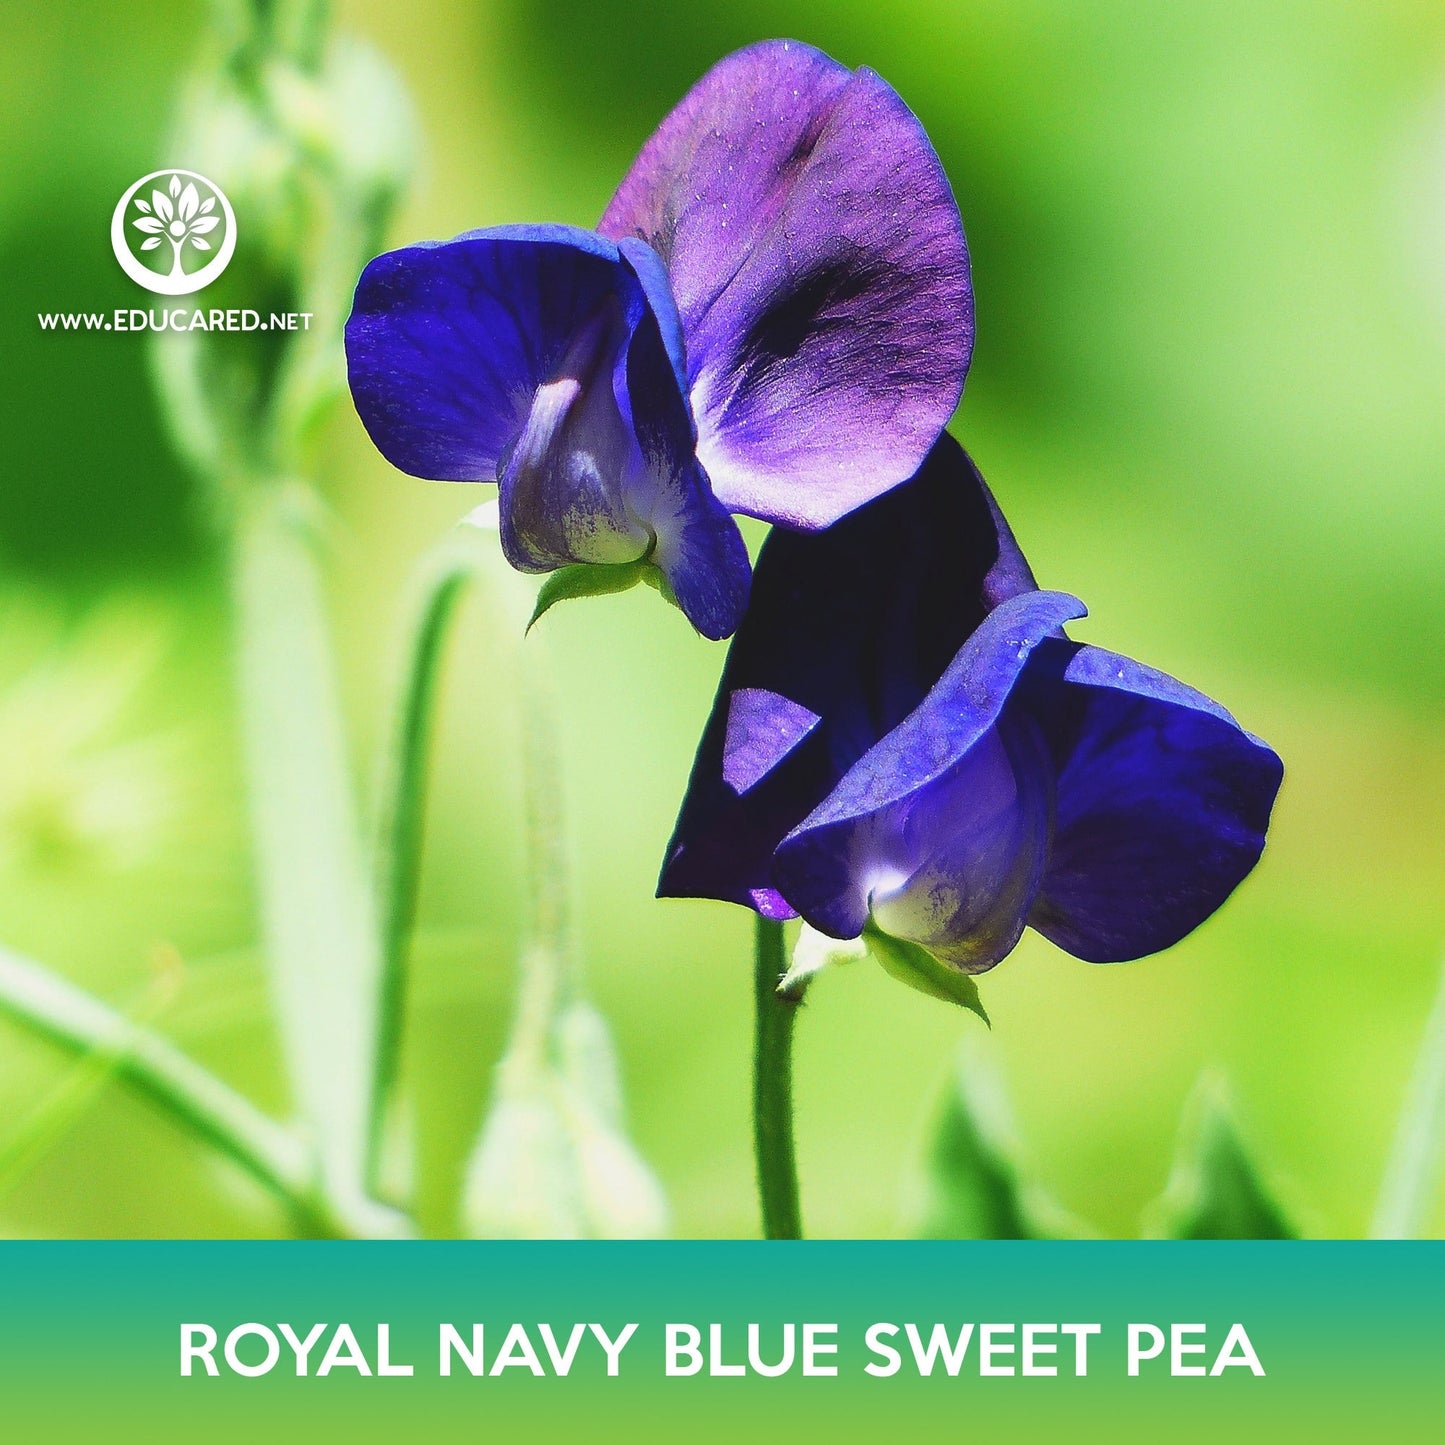 Royal Navy Blue Sweet Pea Seeds